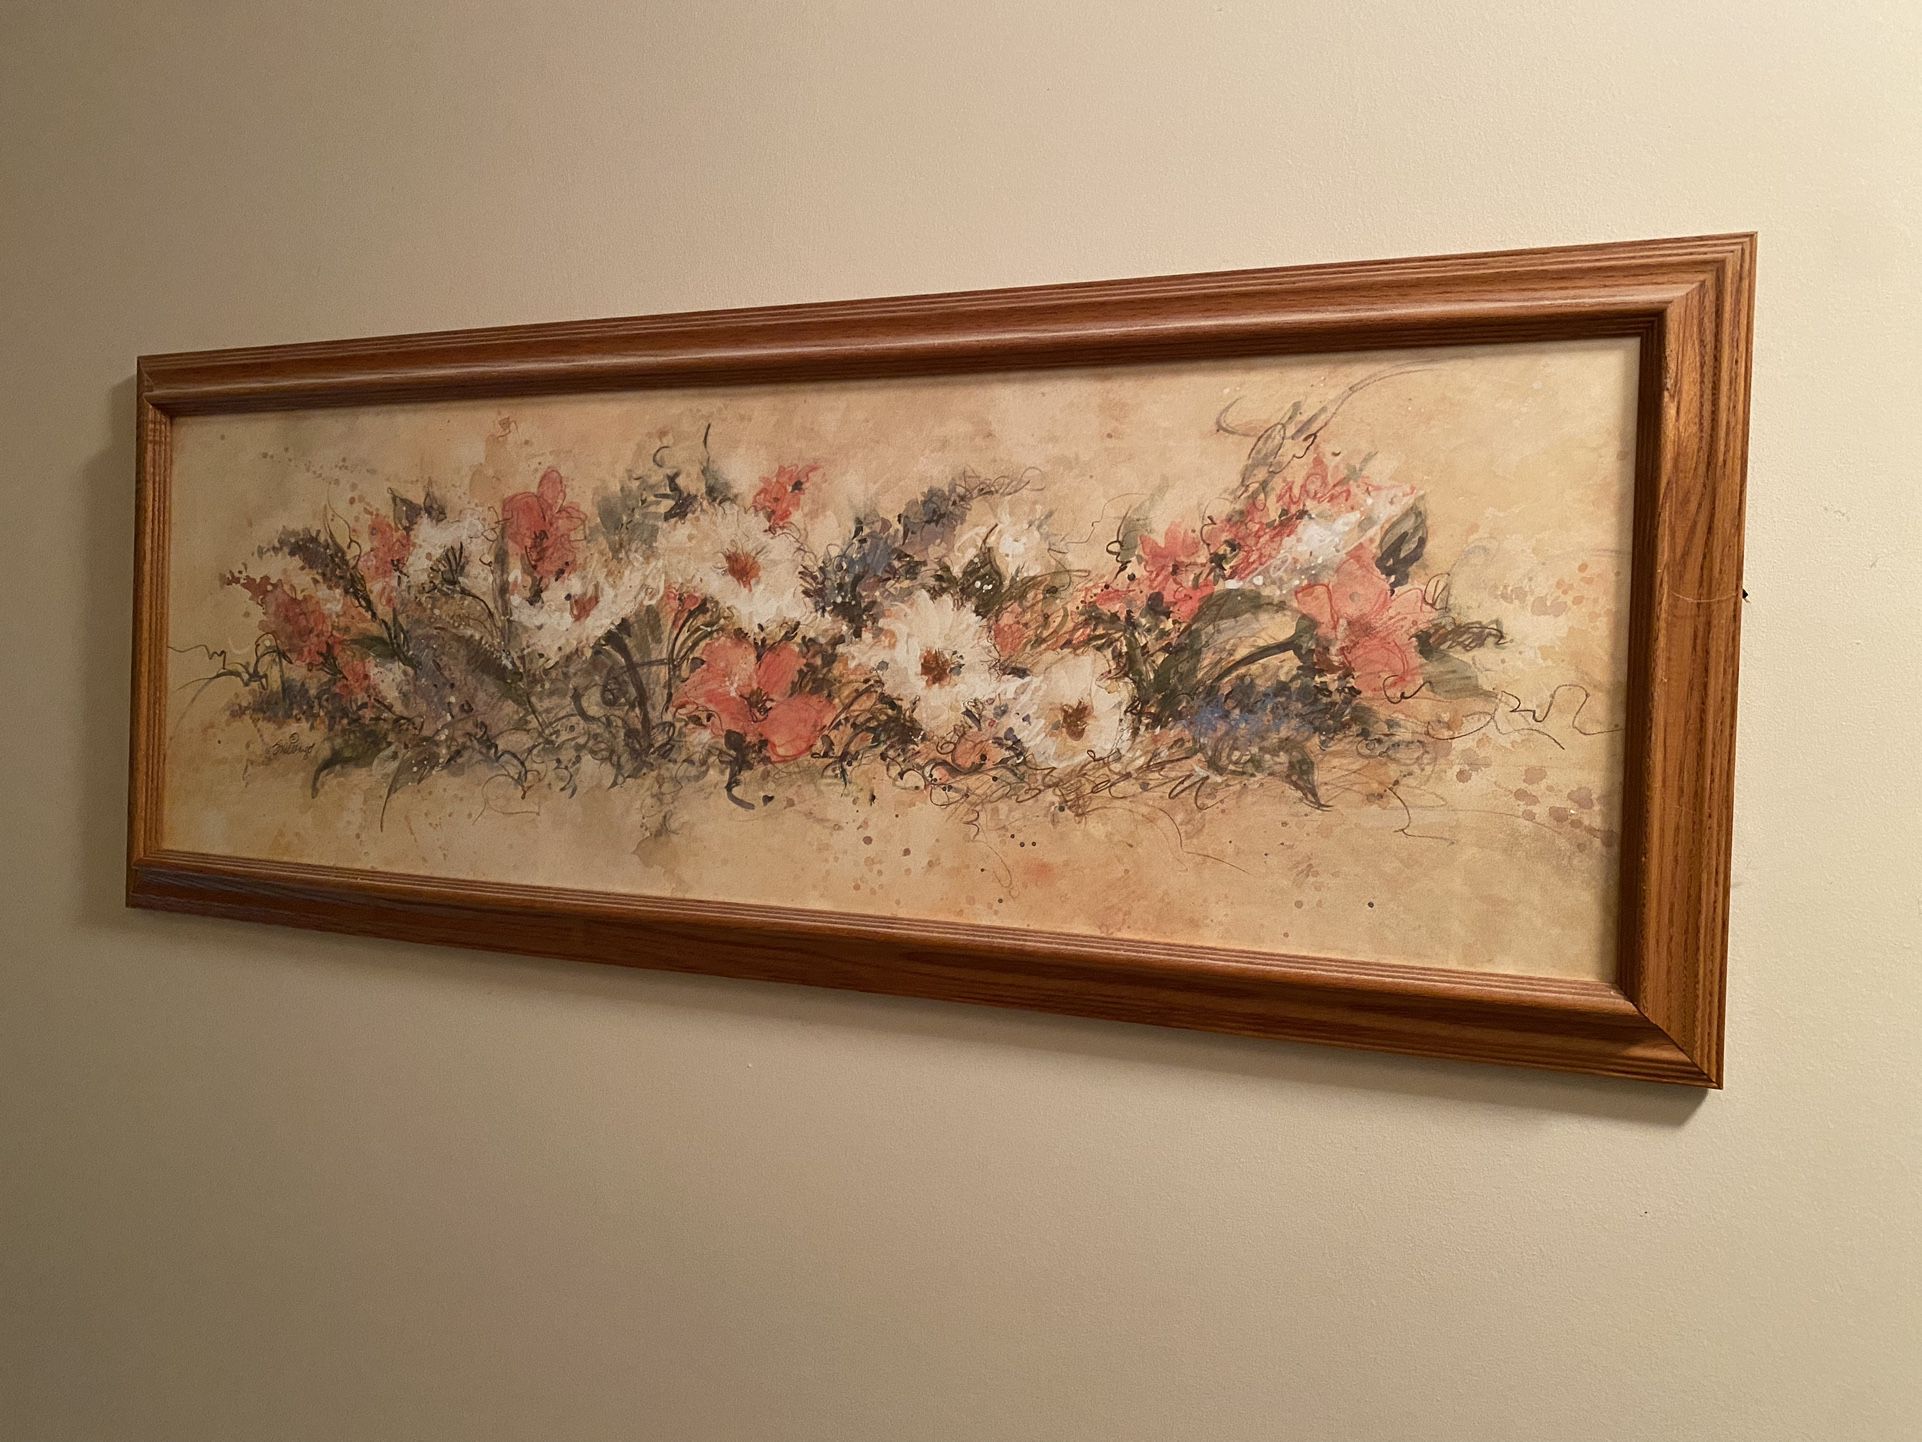 Floral Artwork With Wooden Frame